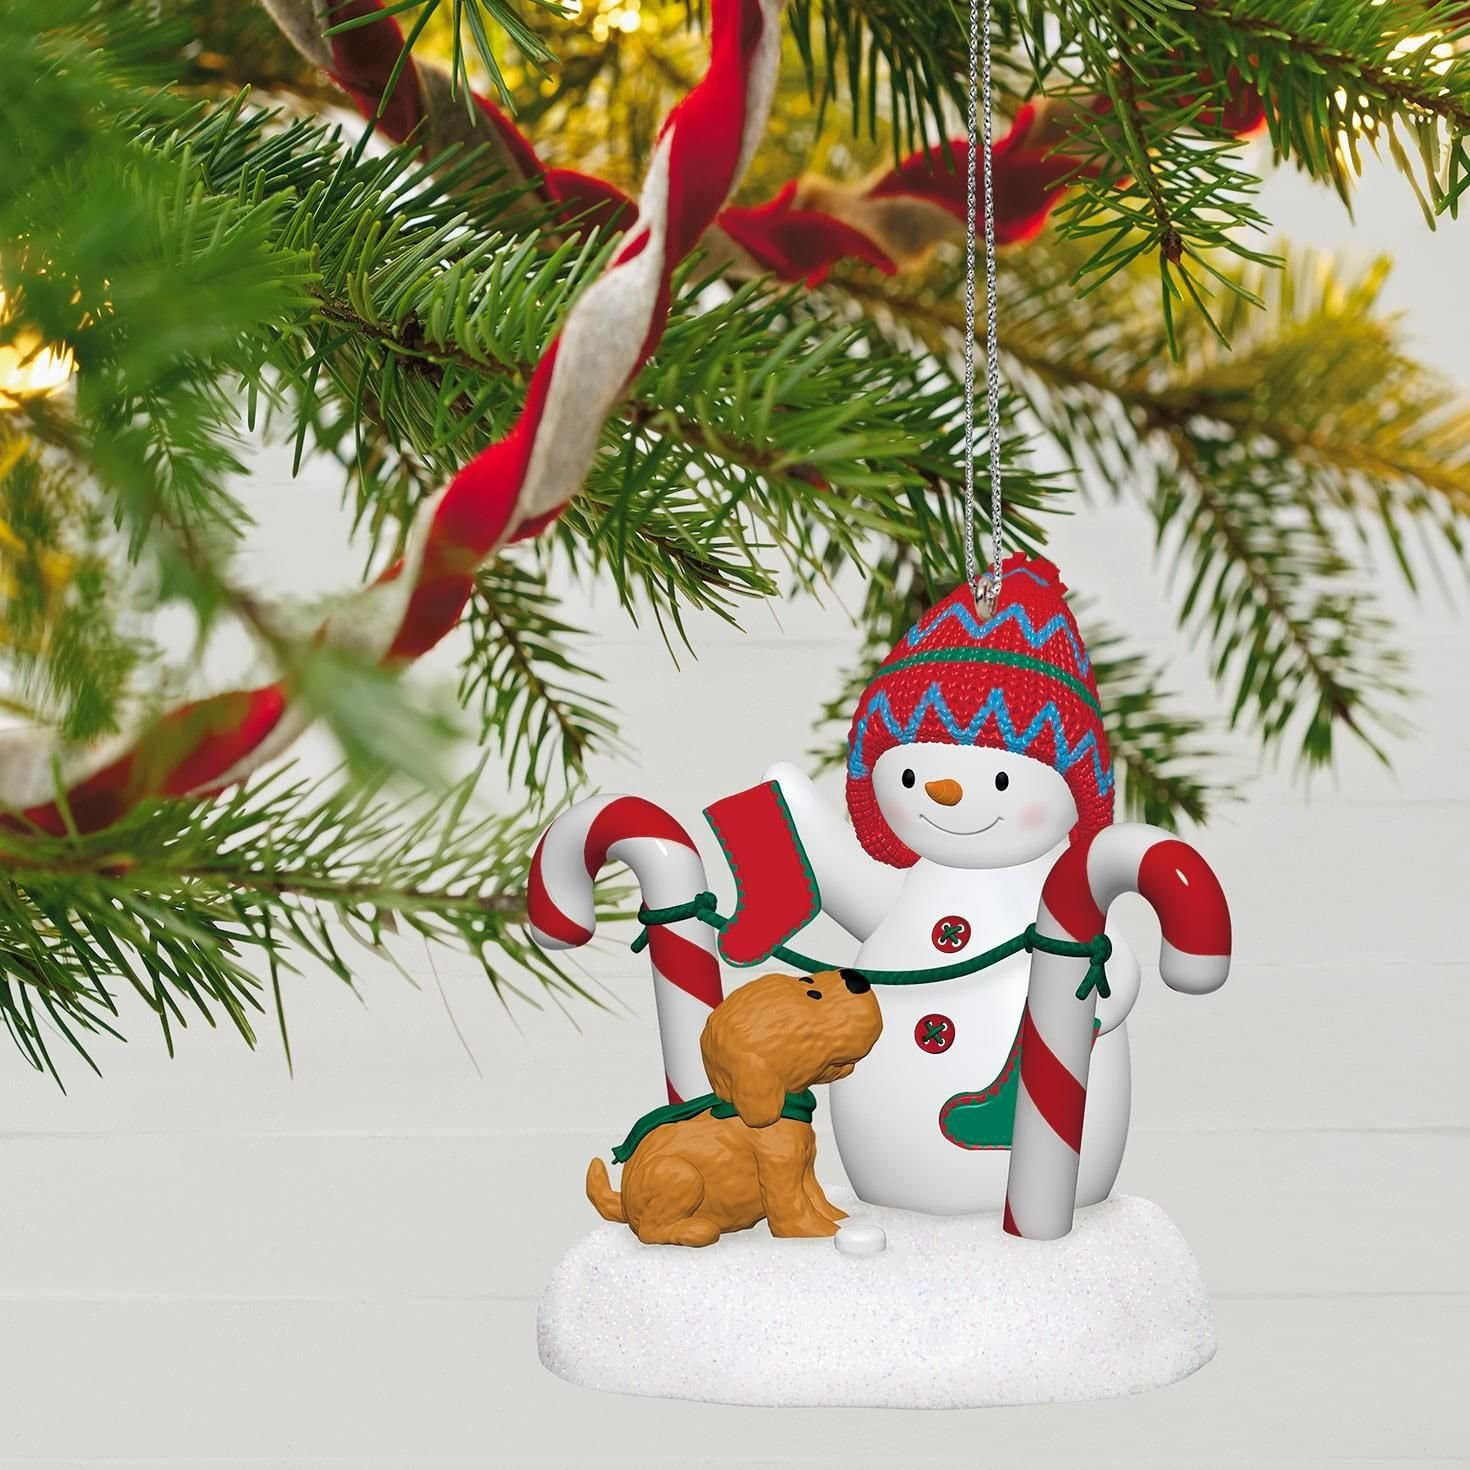 2014 Little Buddies Snowman Christmas Ornament "Initial "C" by Regent Square 